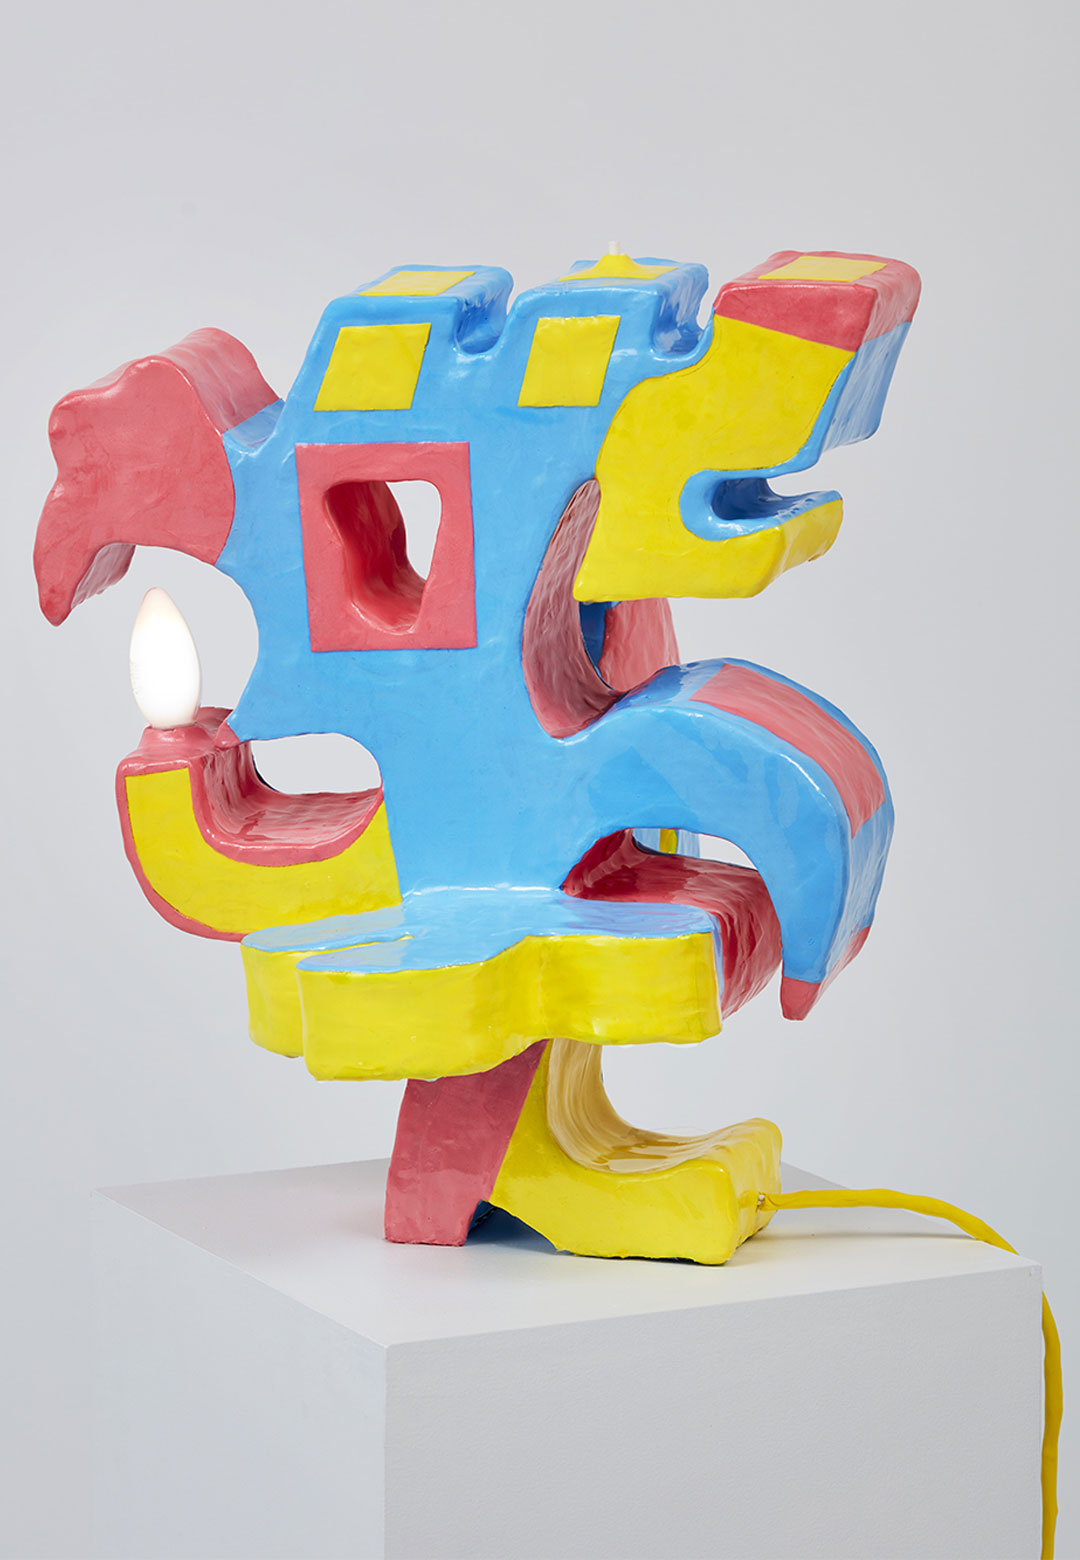 Diego Faivre x Hugo Beheregaray exhibit vibrant abstract objects at Adorno Gallery